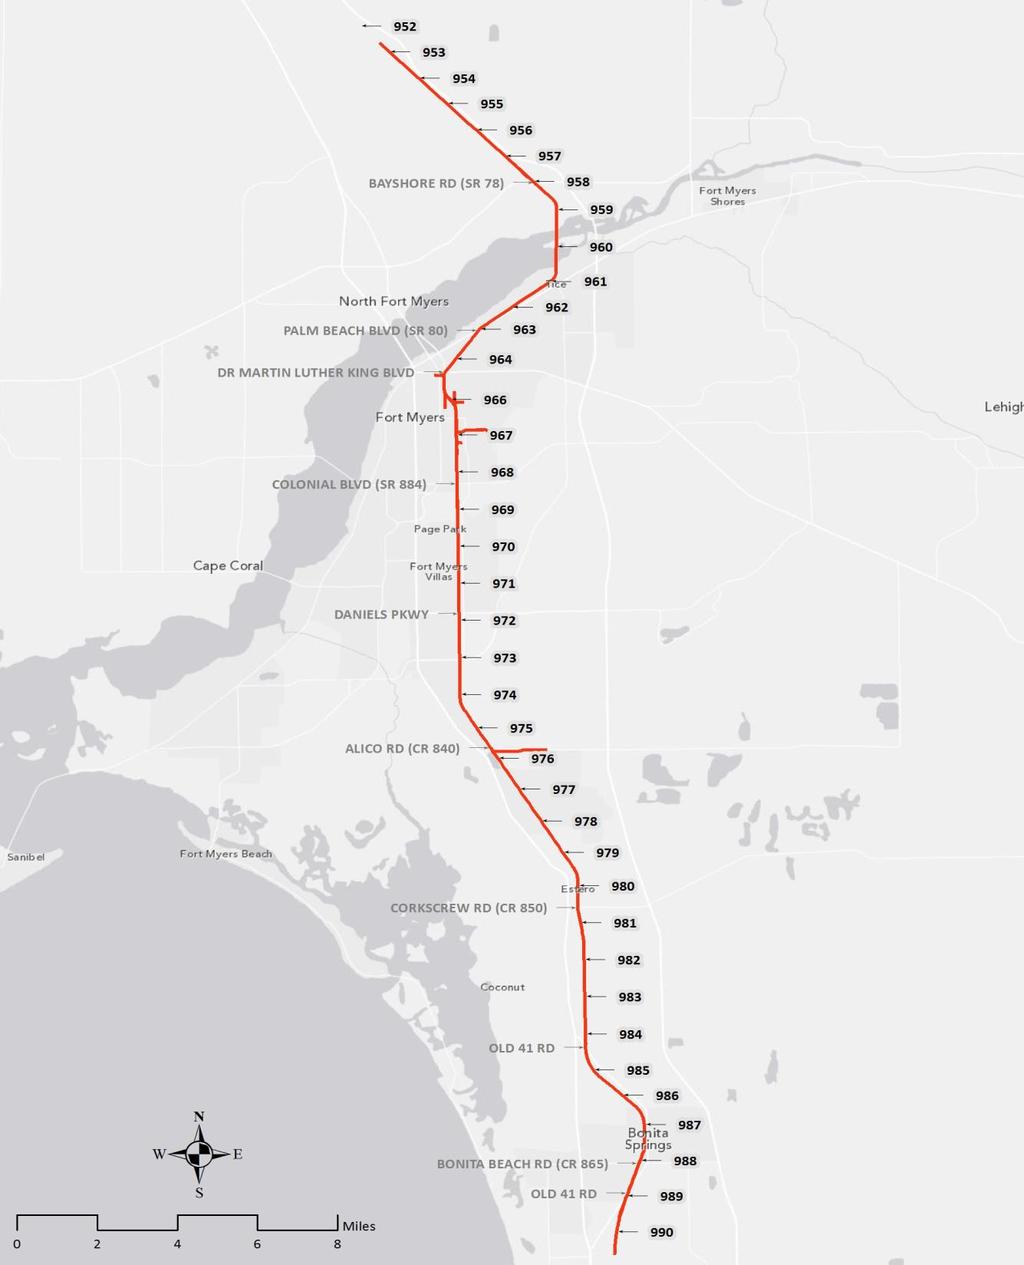 Figure 1: SGLR Corridor with Mileposts Source: